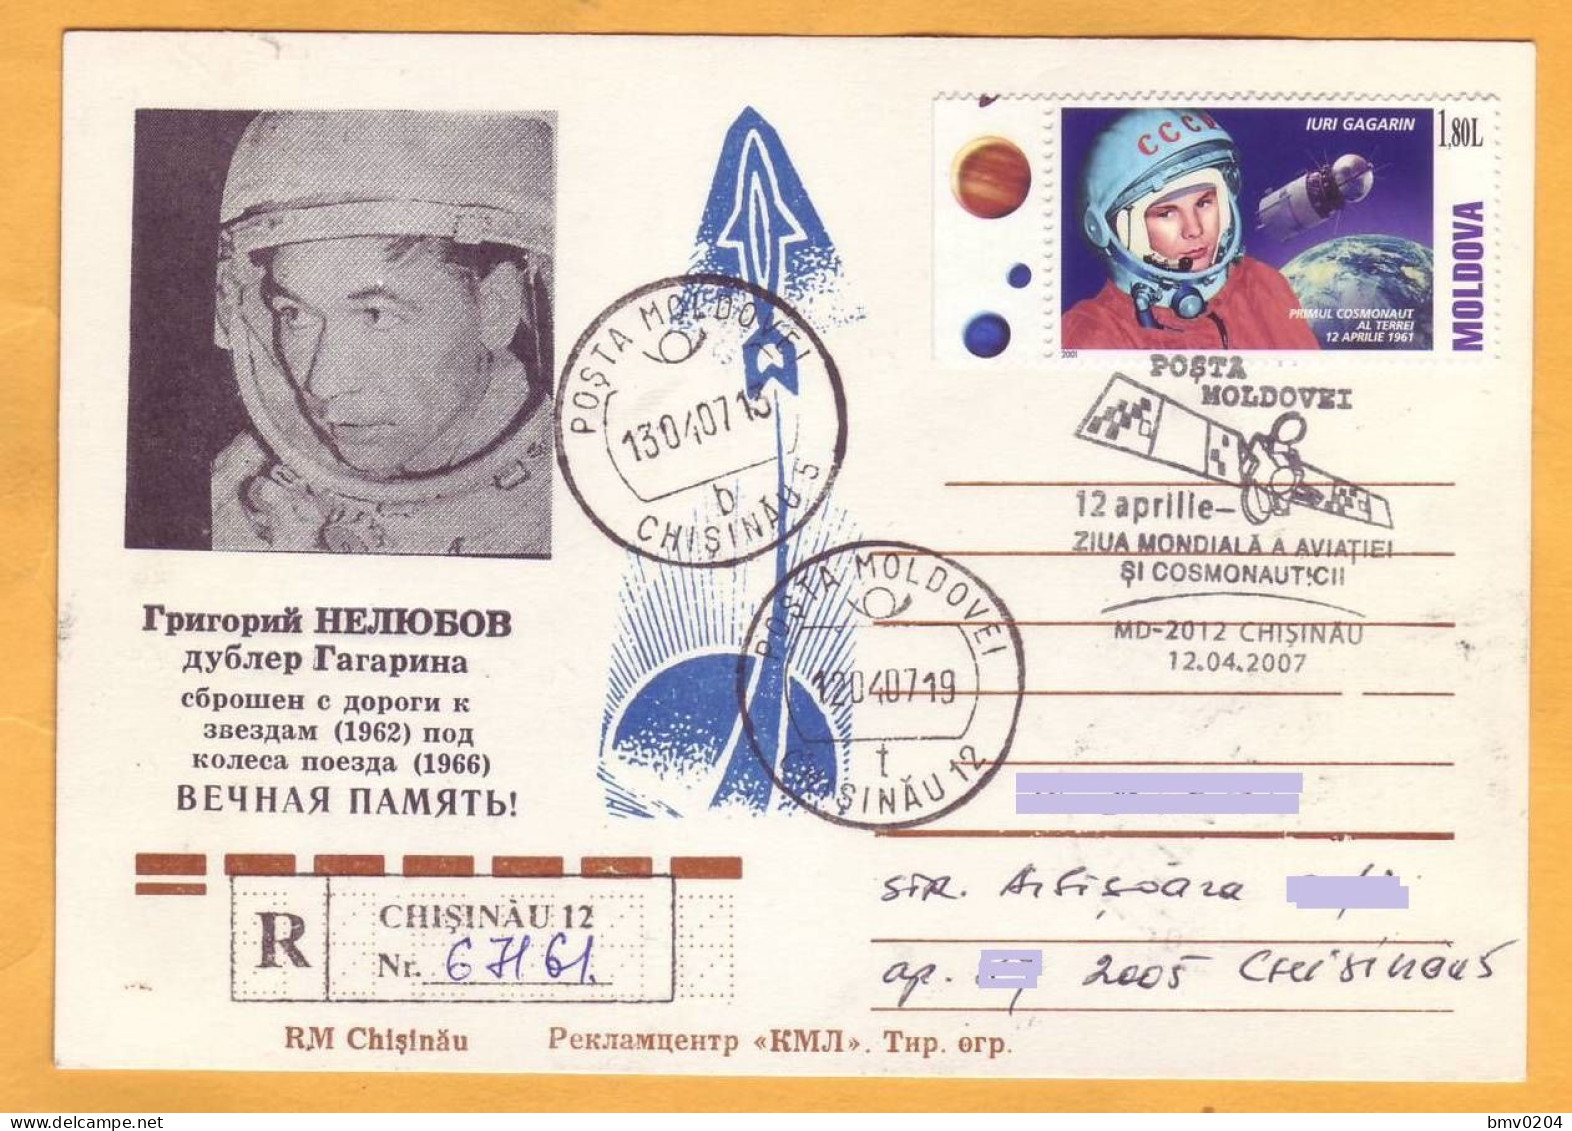 2007 Moldova Cover Special Cancellation "Day Of Aviation And Cosmonautics", Grigory NELYUBOV, Gagarin's Understudy - Moldavia